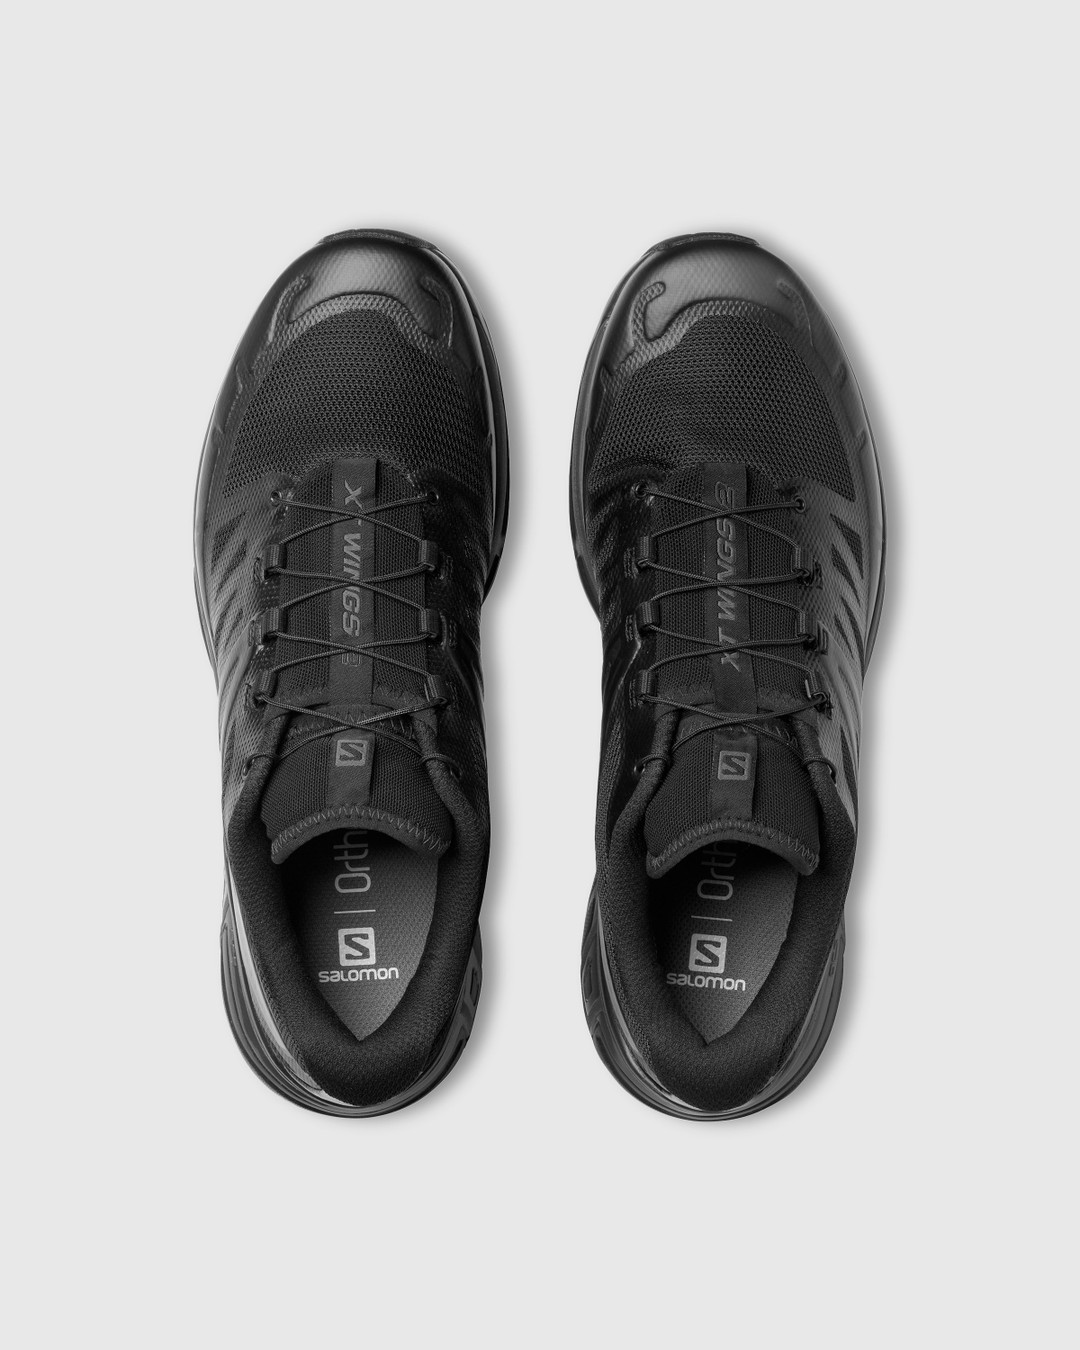 Salomon – XT-Wings 2 Advanced Black/Black/Magnet - Sneakers - Black - Image 3